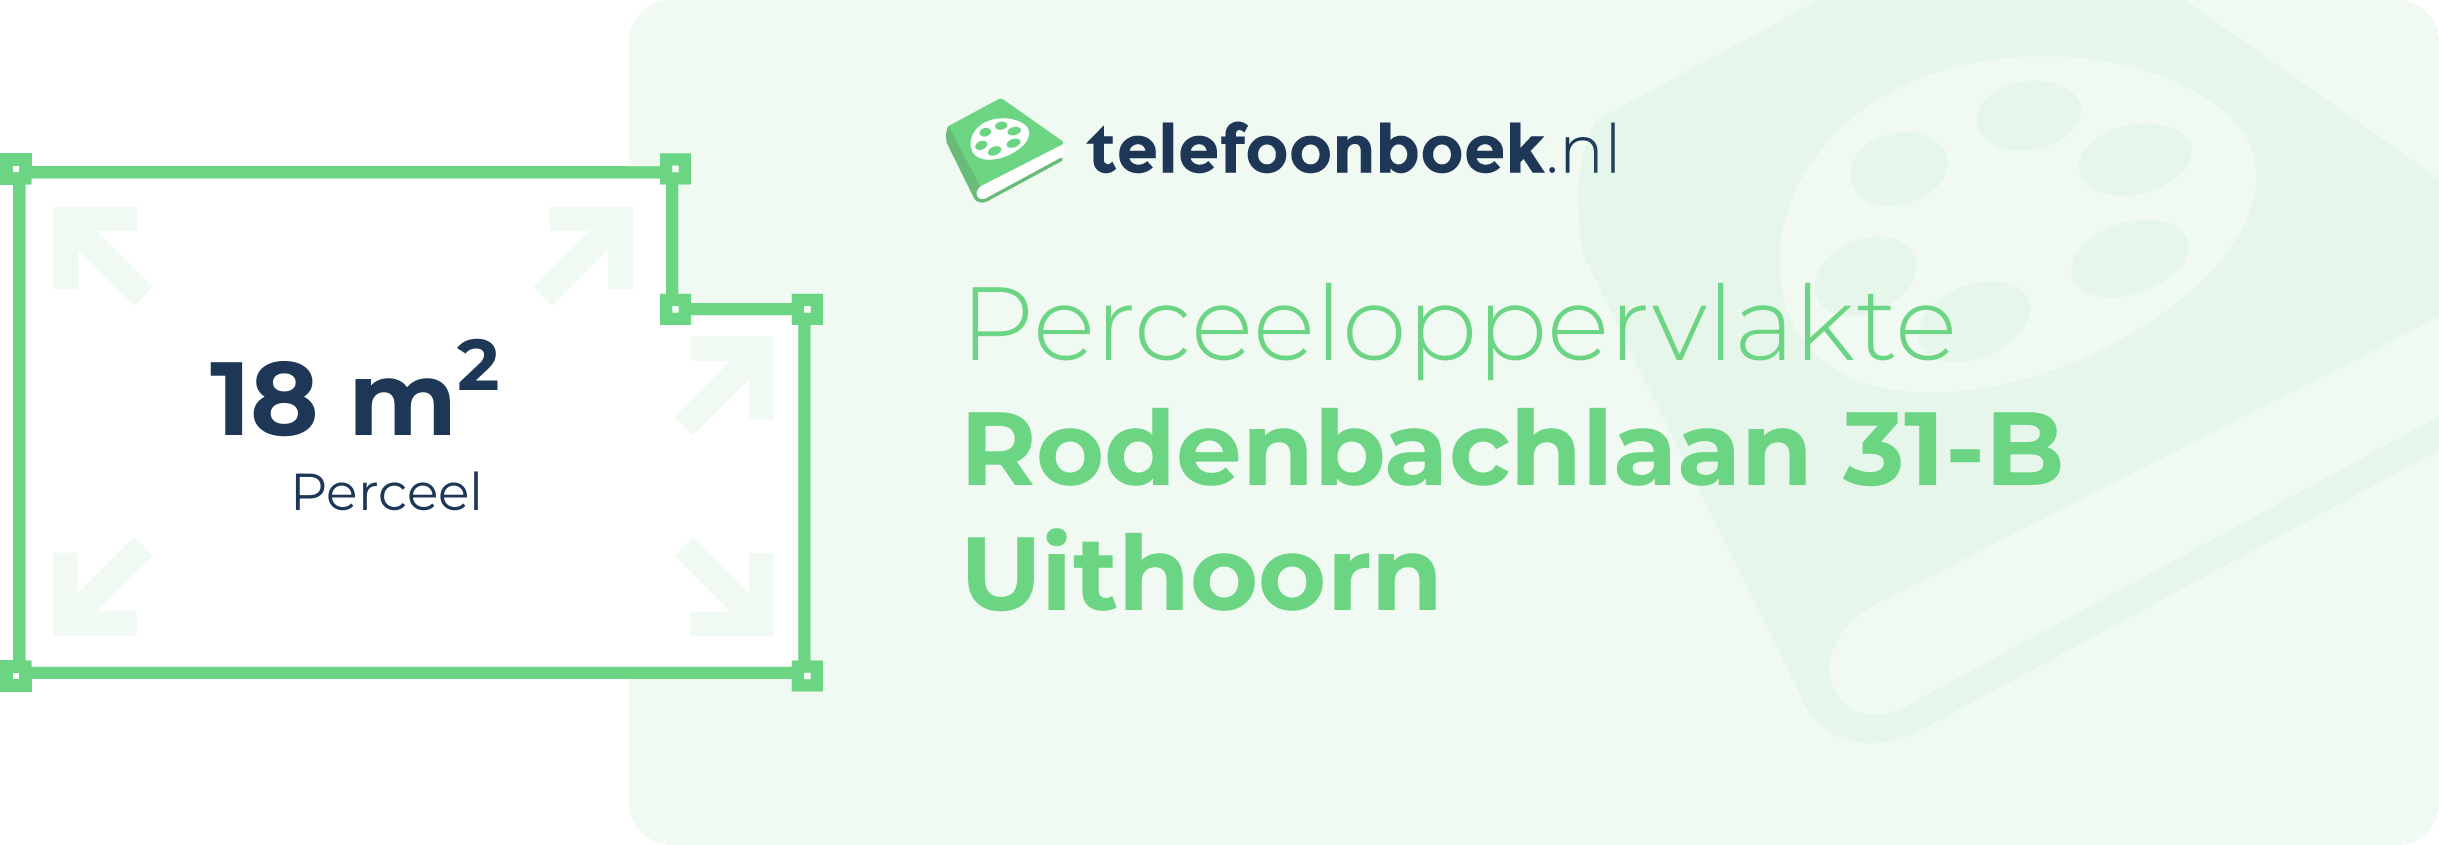 Perceeloppervlakte Rodenbachlaan 31-B Uithoorn